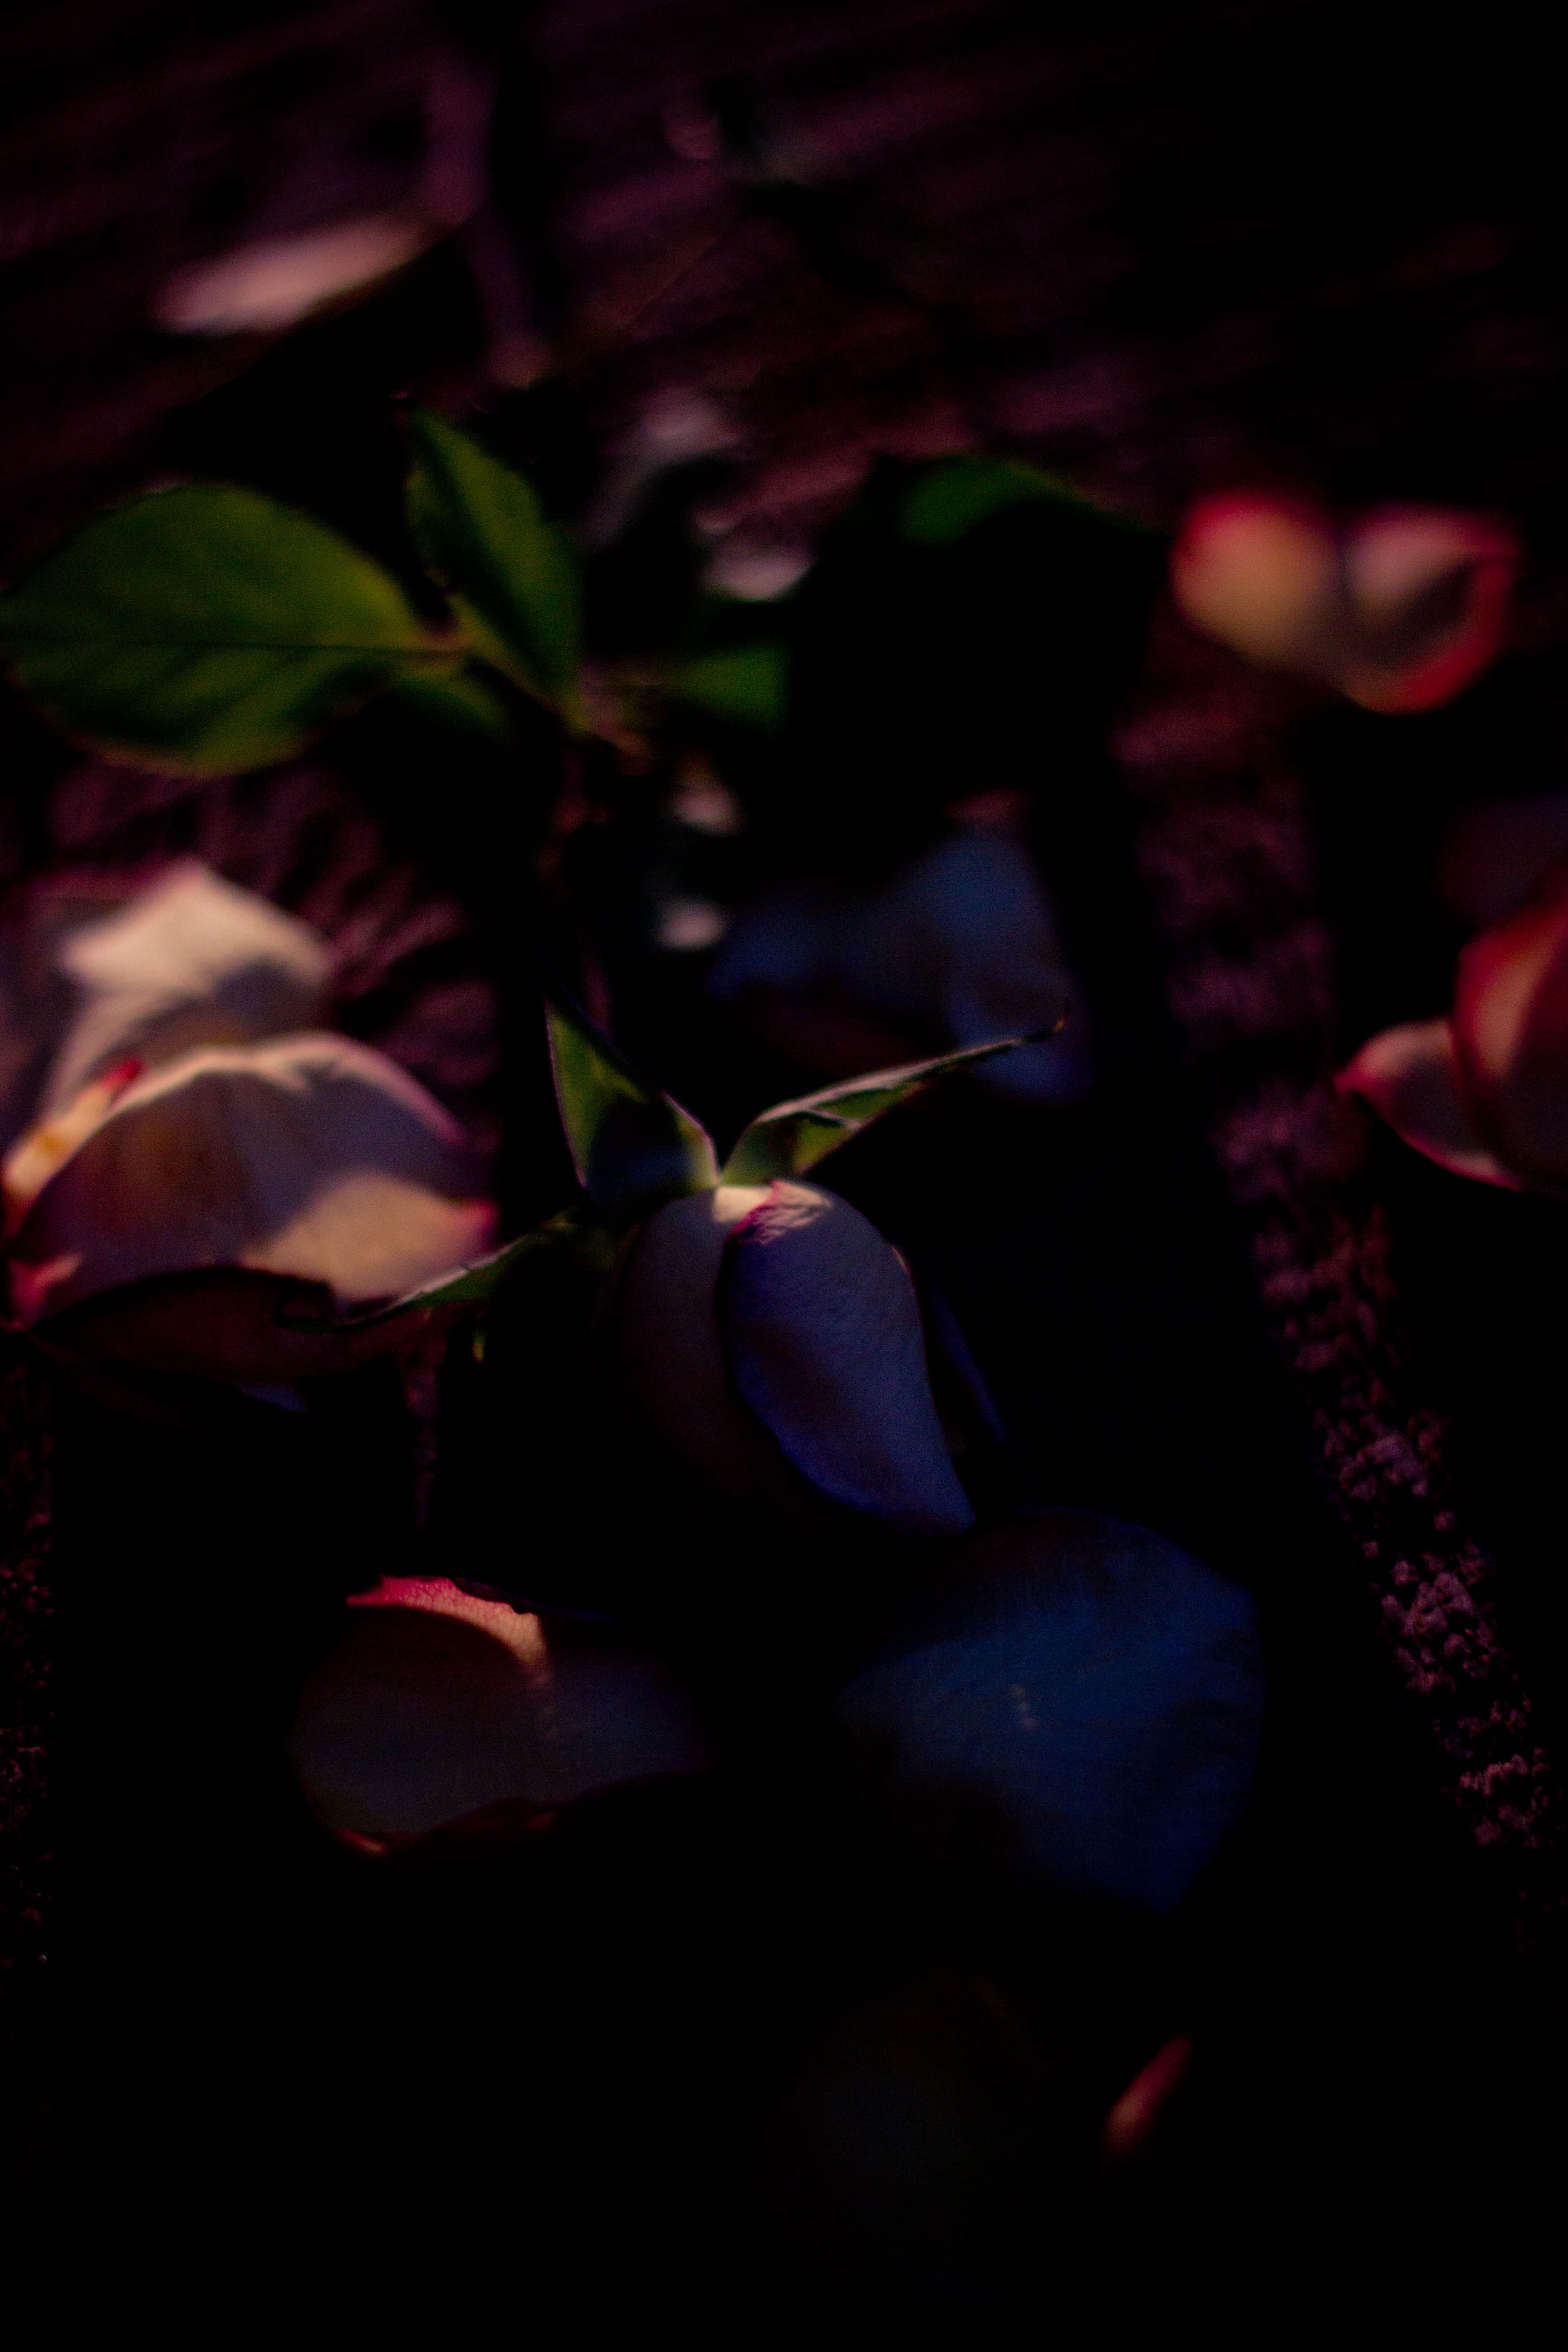 Free Image : flower, darkness, light, petal, plant, leaf, lighting, computer wallpaper, midnight, night, still life photography, macro photography 3456x5184